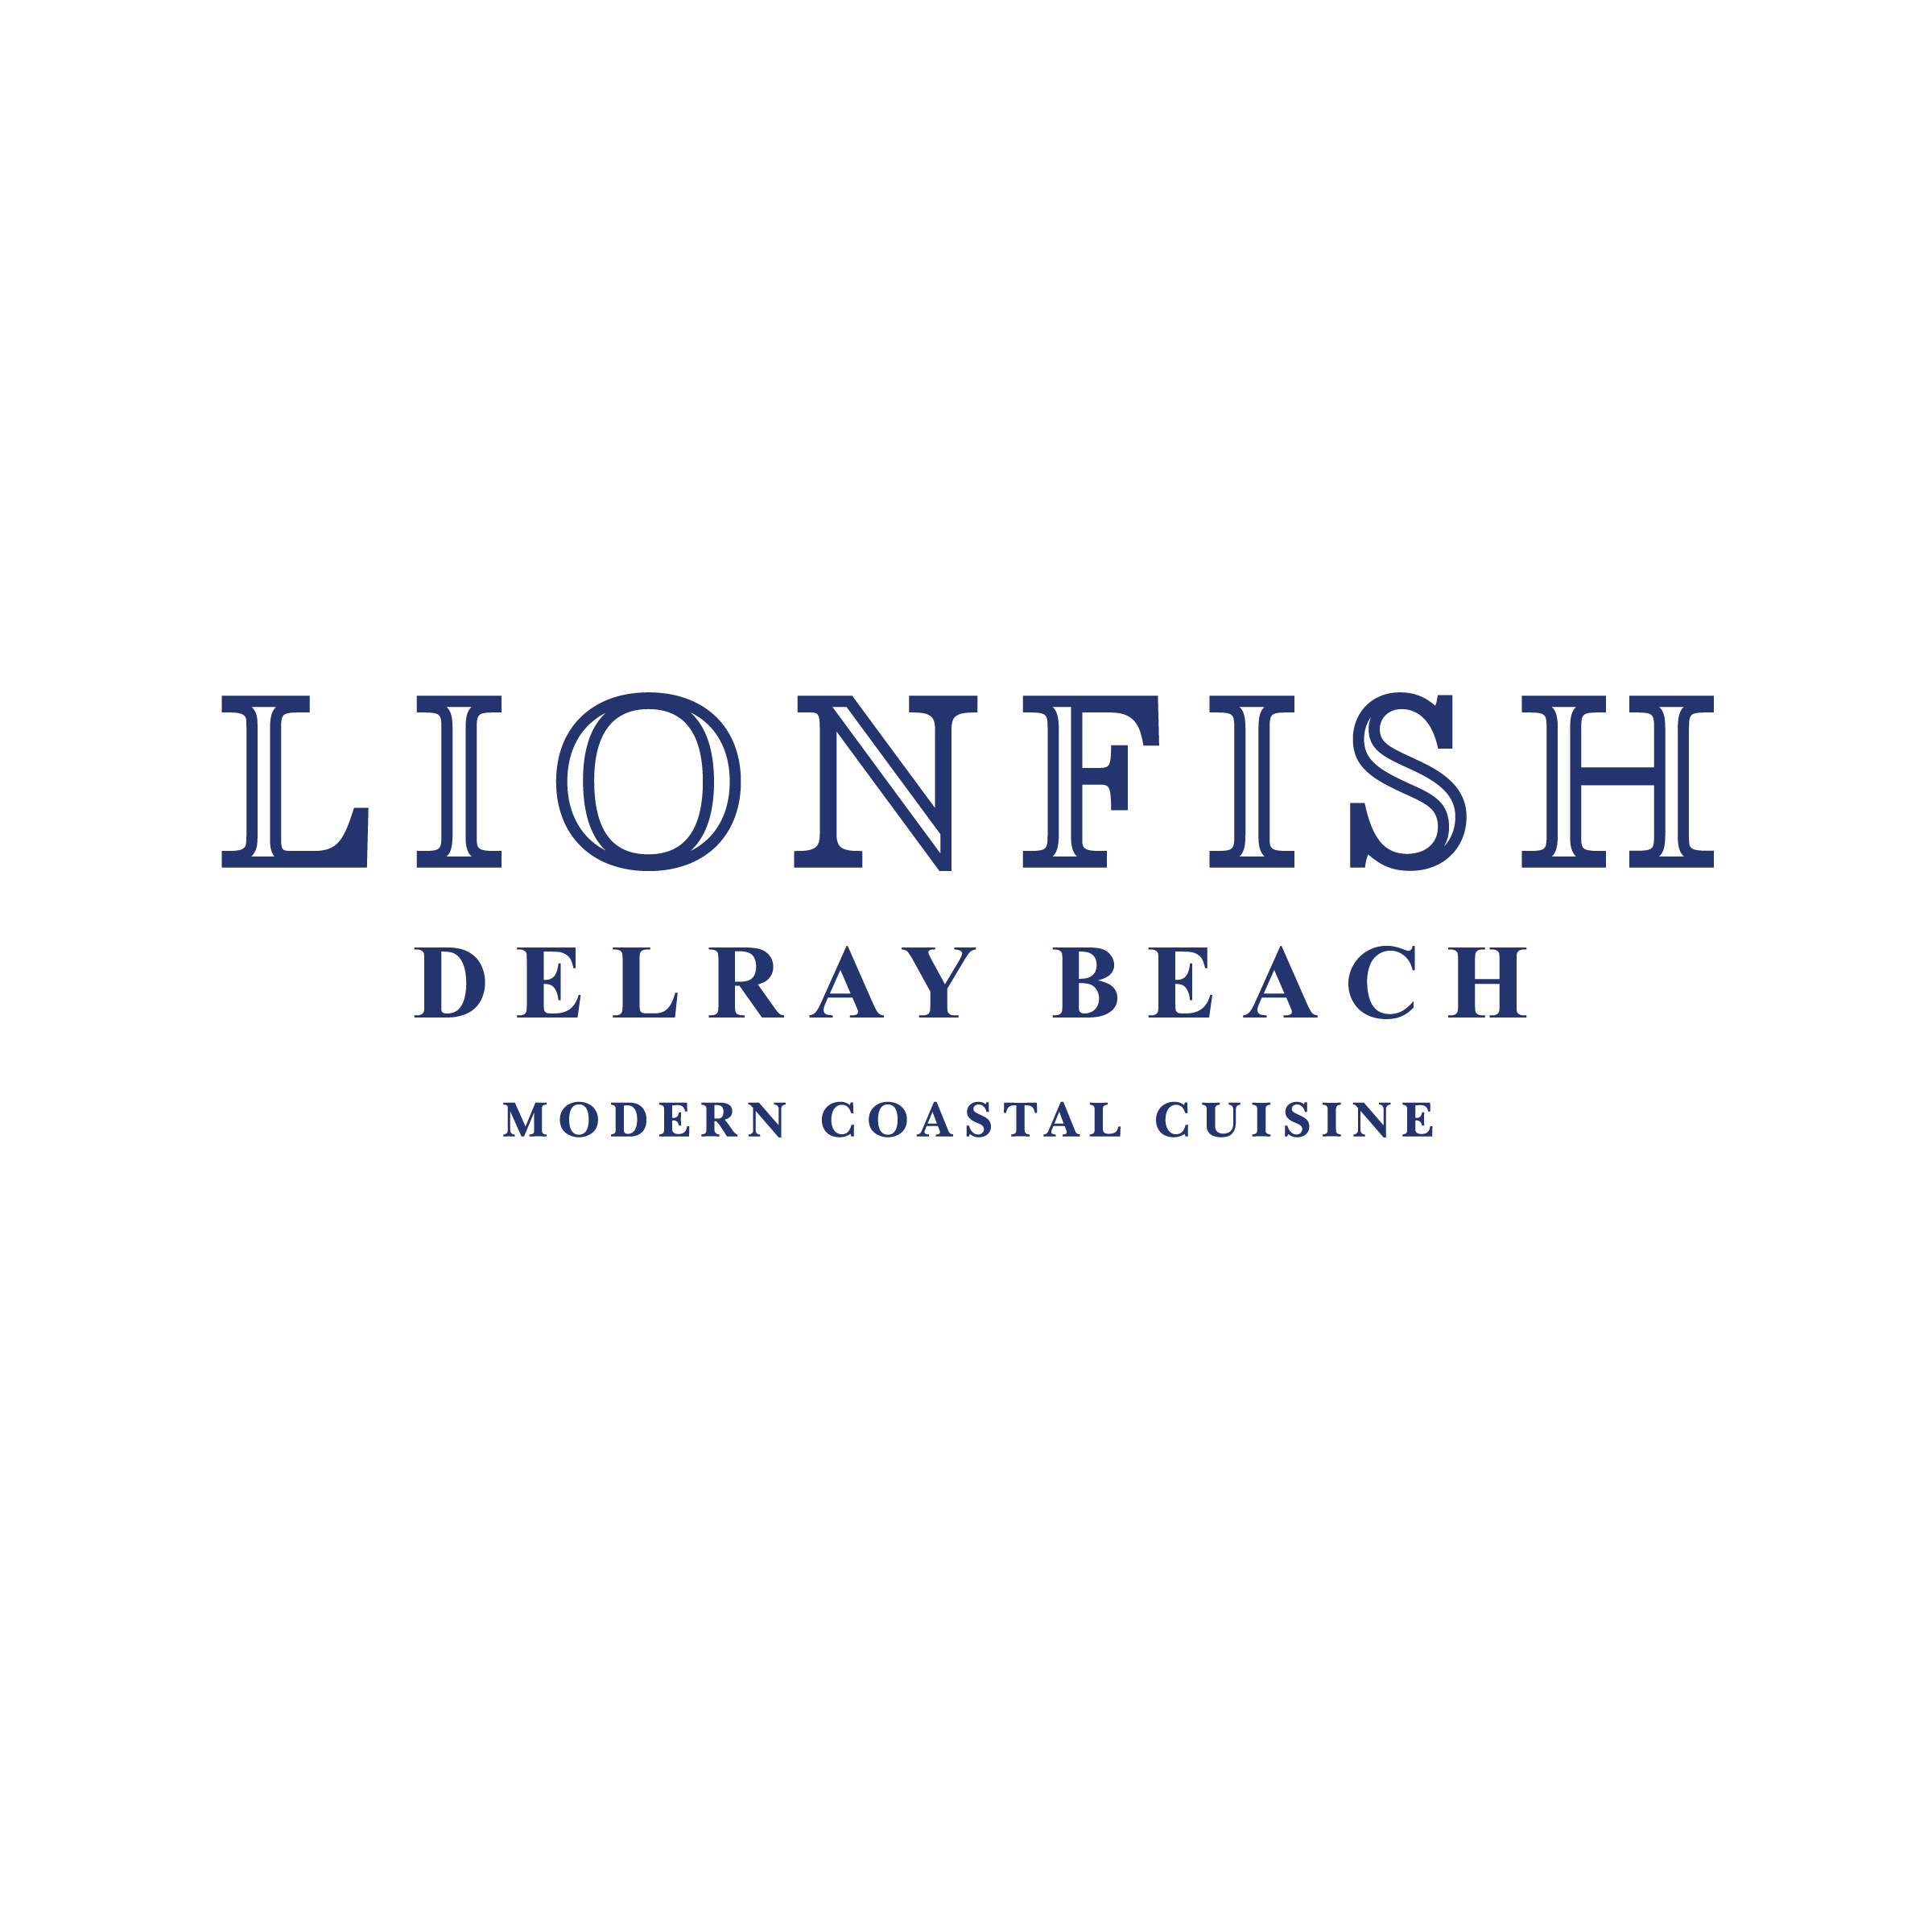 Lionfish Delray